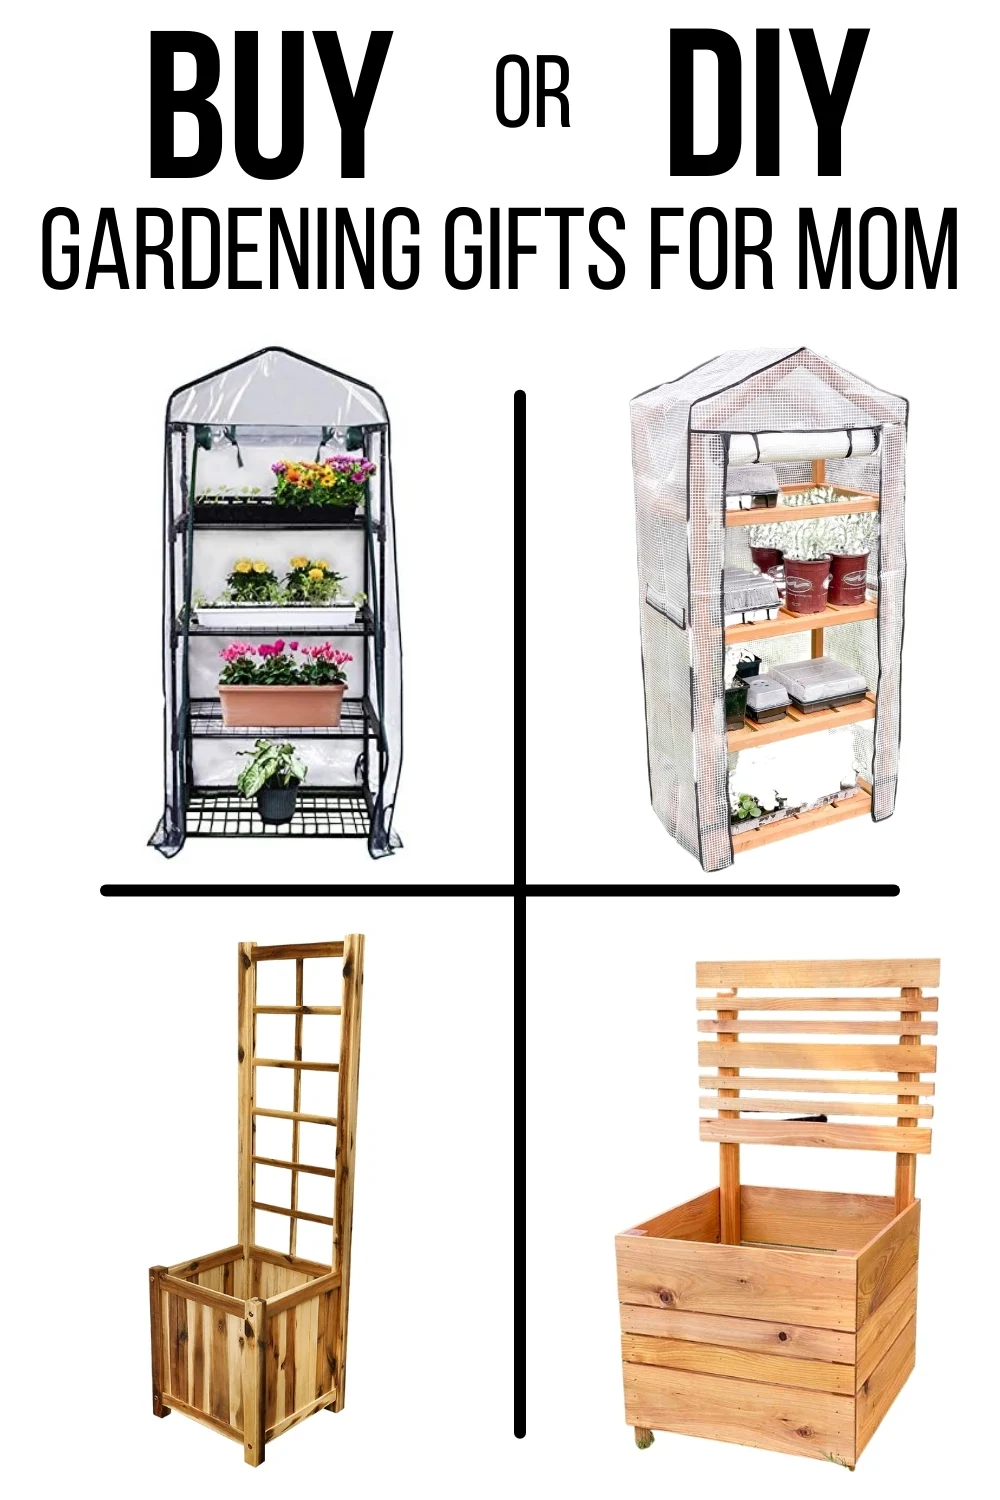 DIY Gardening Gift Ideas for Mom - FineGardening